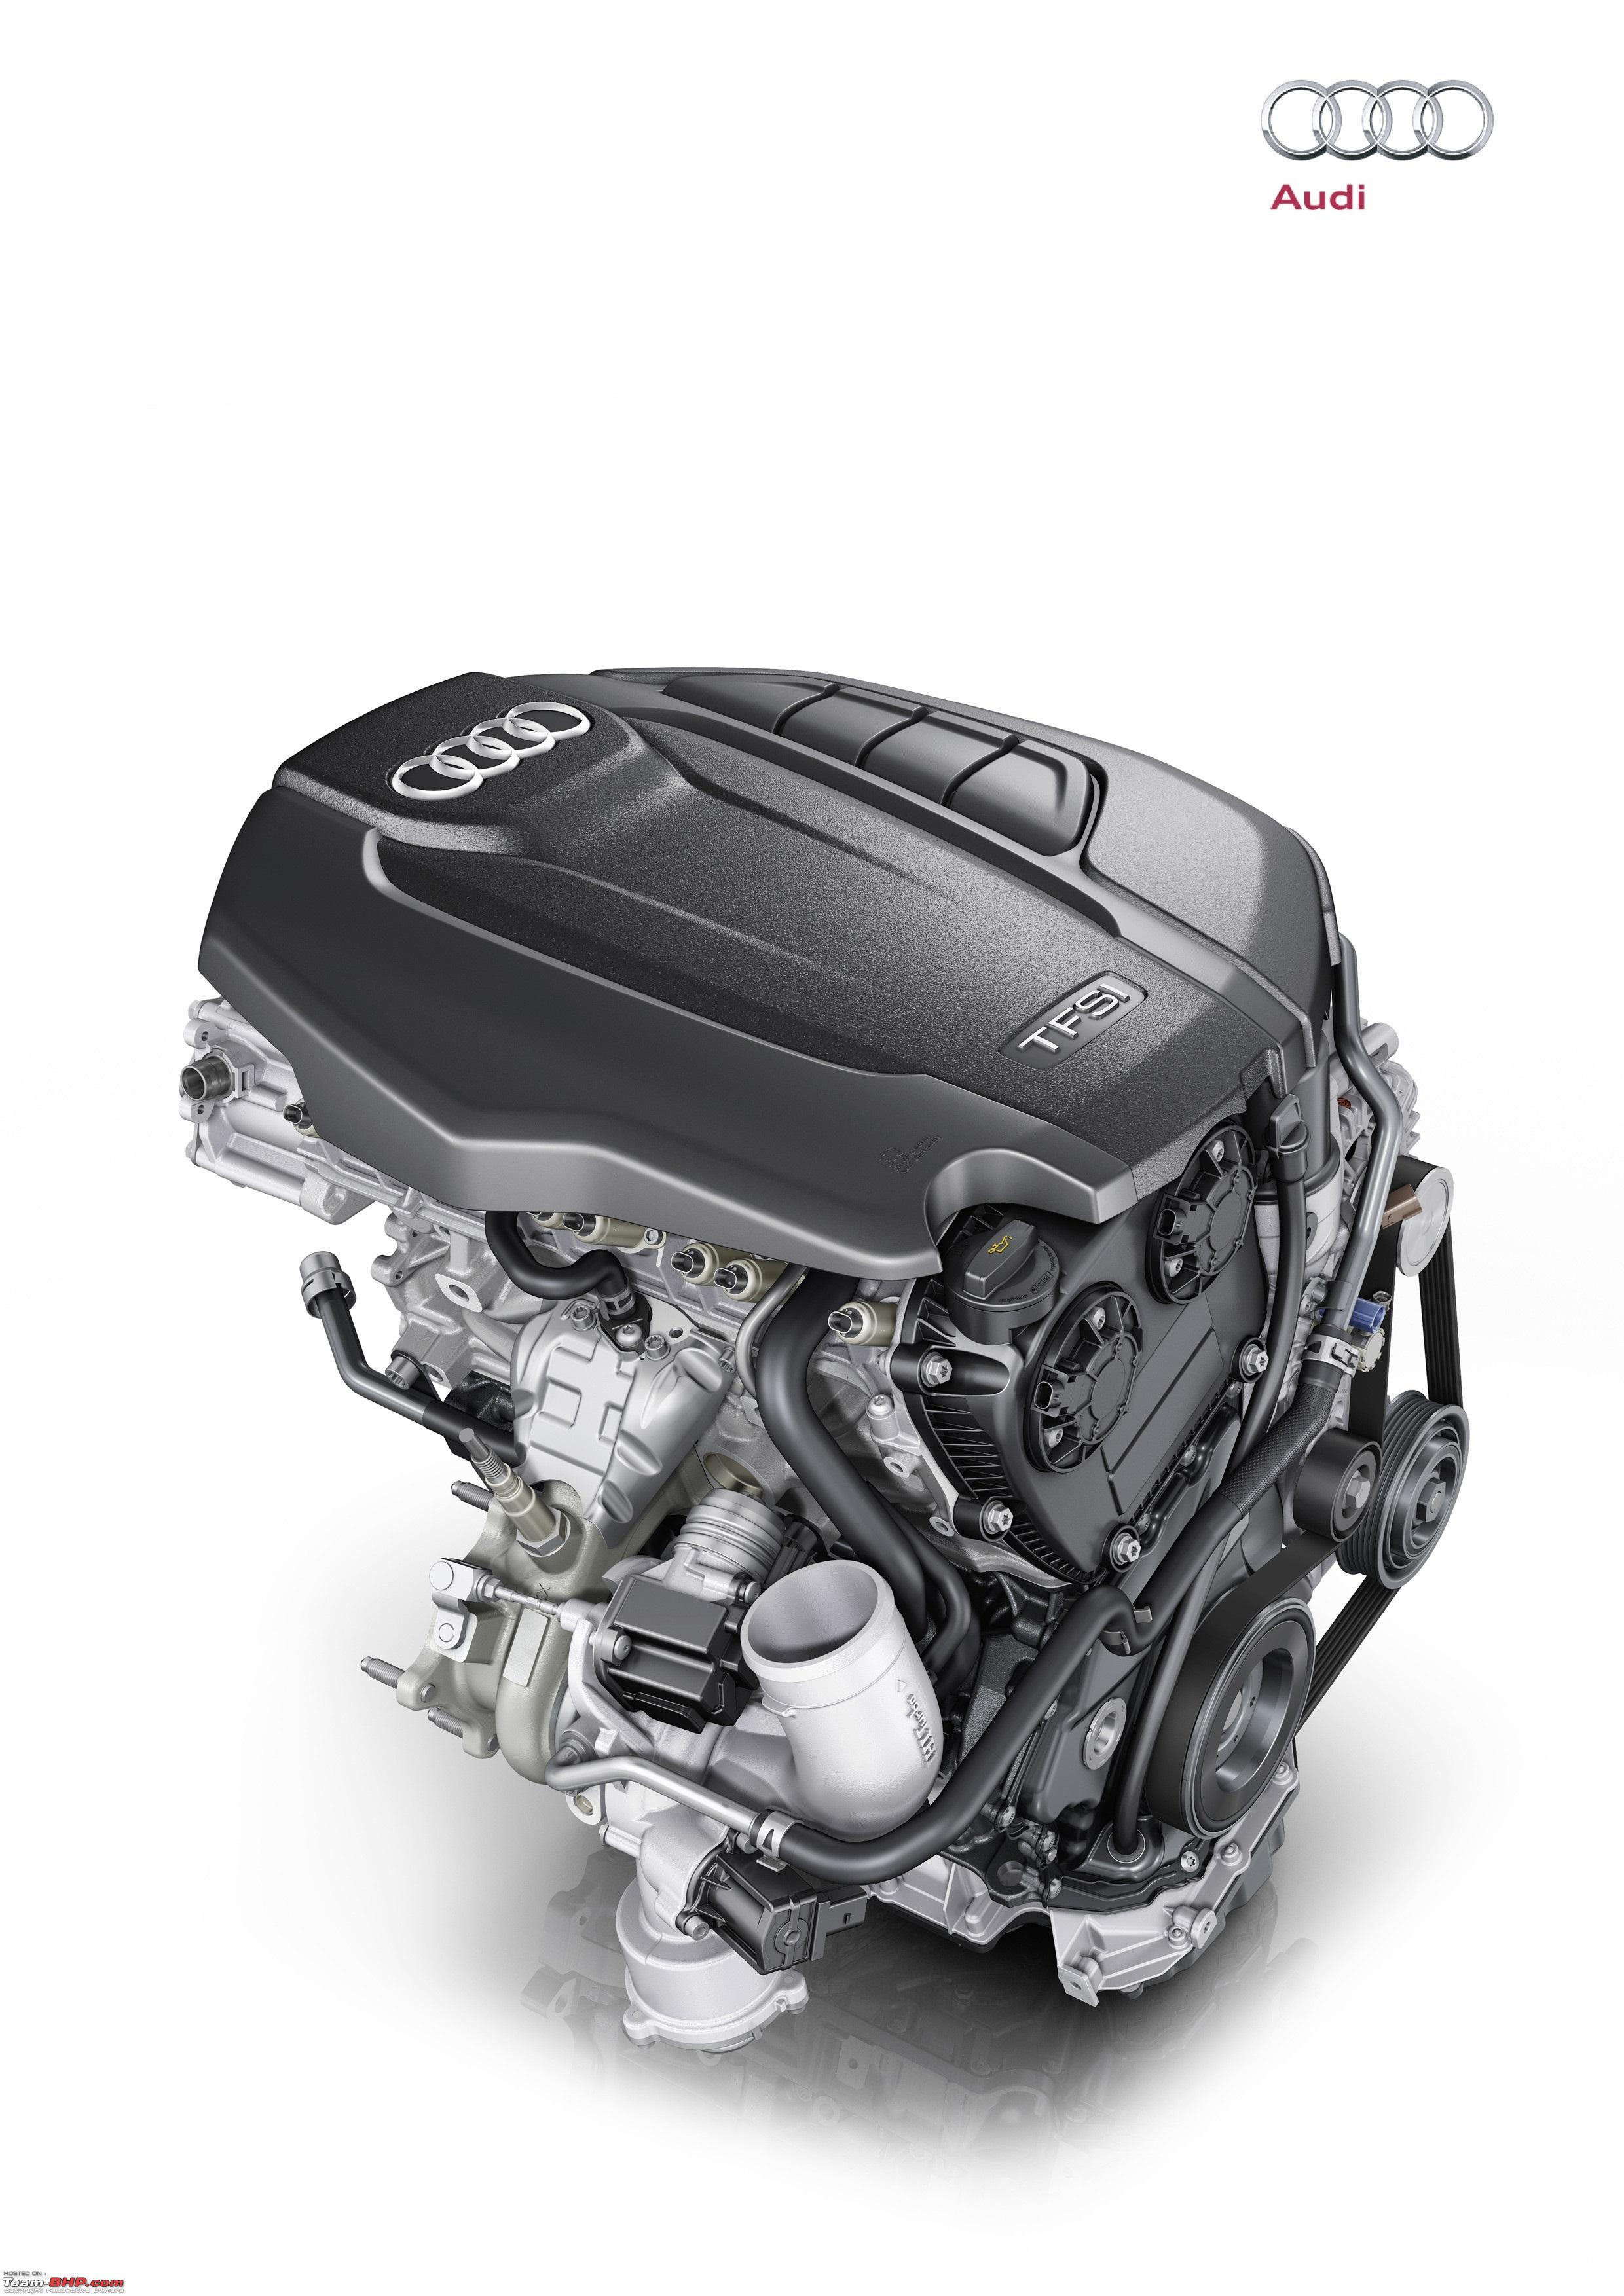 Двигатель audi 2.0 tfsi. Gen3 мотор Ауди а4. Audi a5 2.0 TFSI. Мотор TFSI 1.8. Мотор Ауди а5 1.8 TFSI.